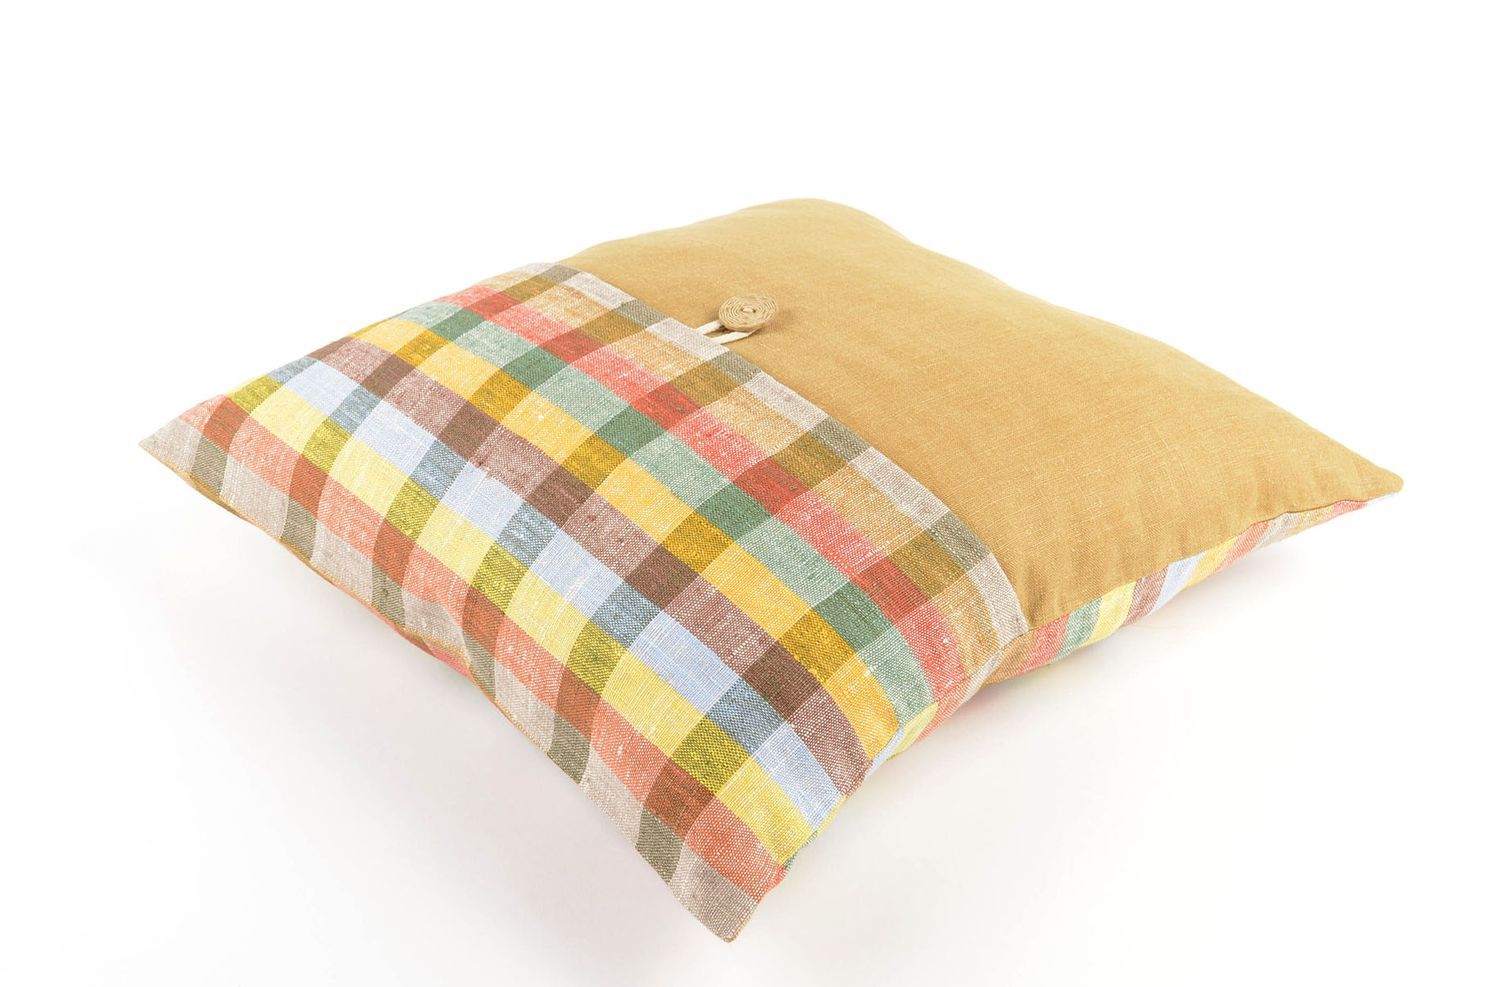 Handmade soft pillow design decorative cushion home textiles gift ideas photo 1